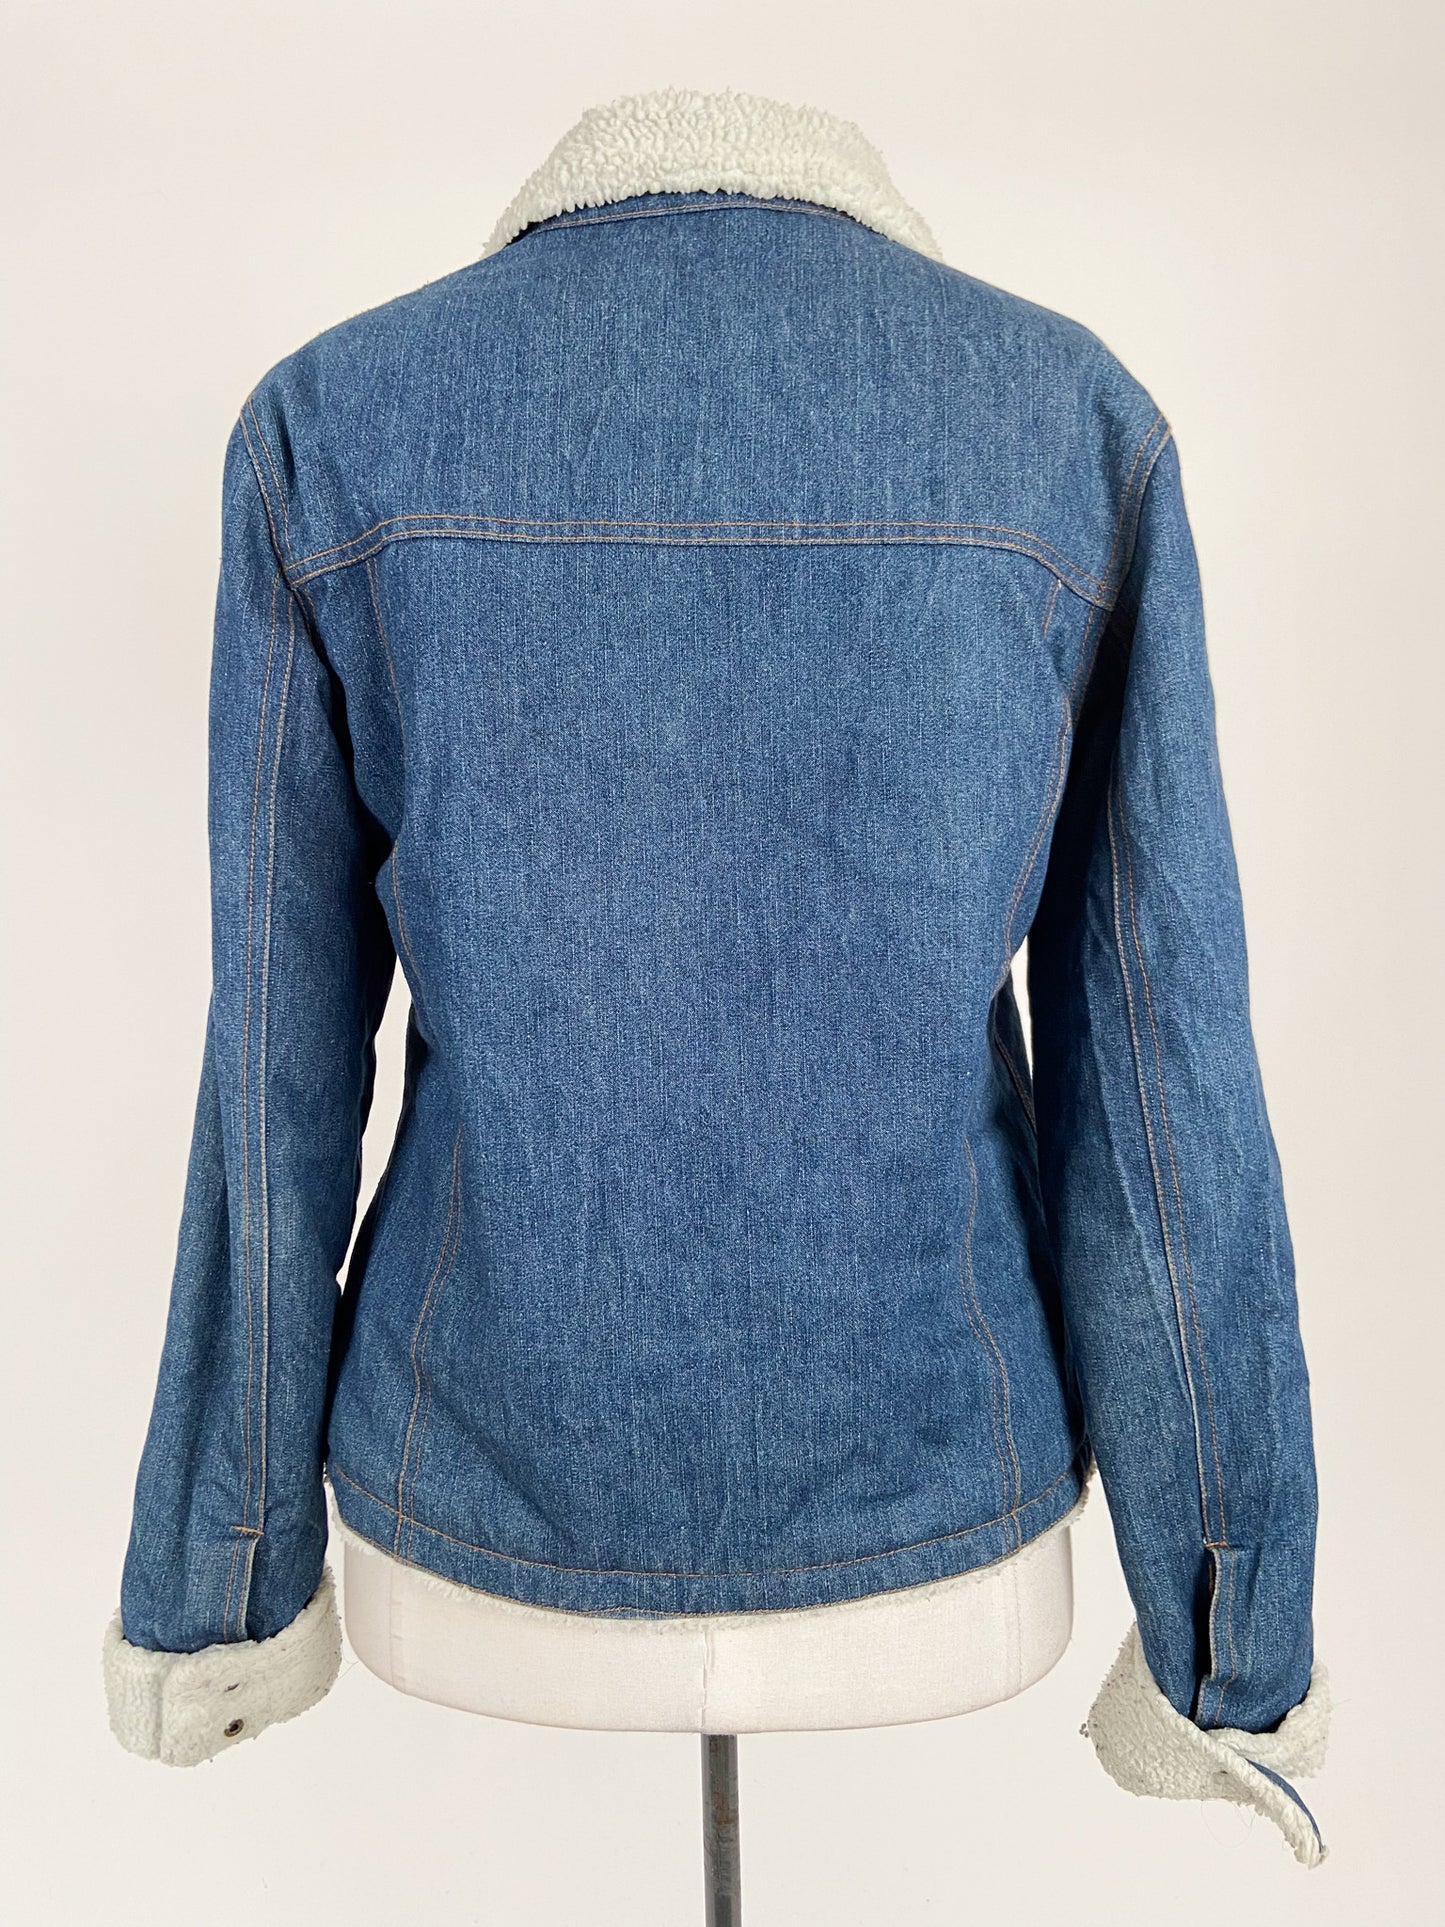 Steve & Barry's Brand | Blue Casual Jacket | Size L